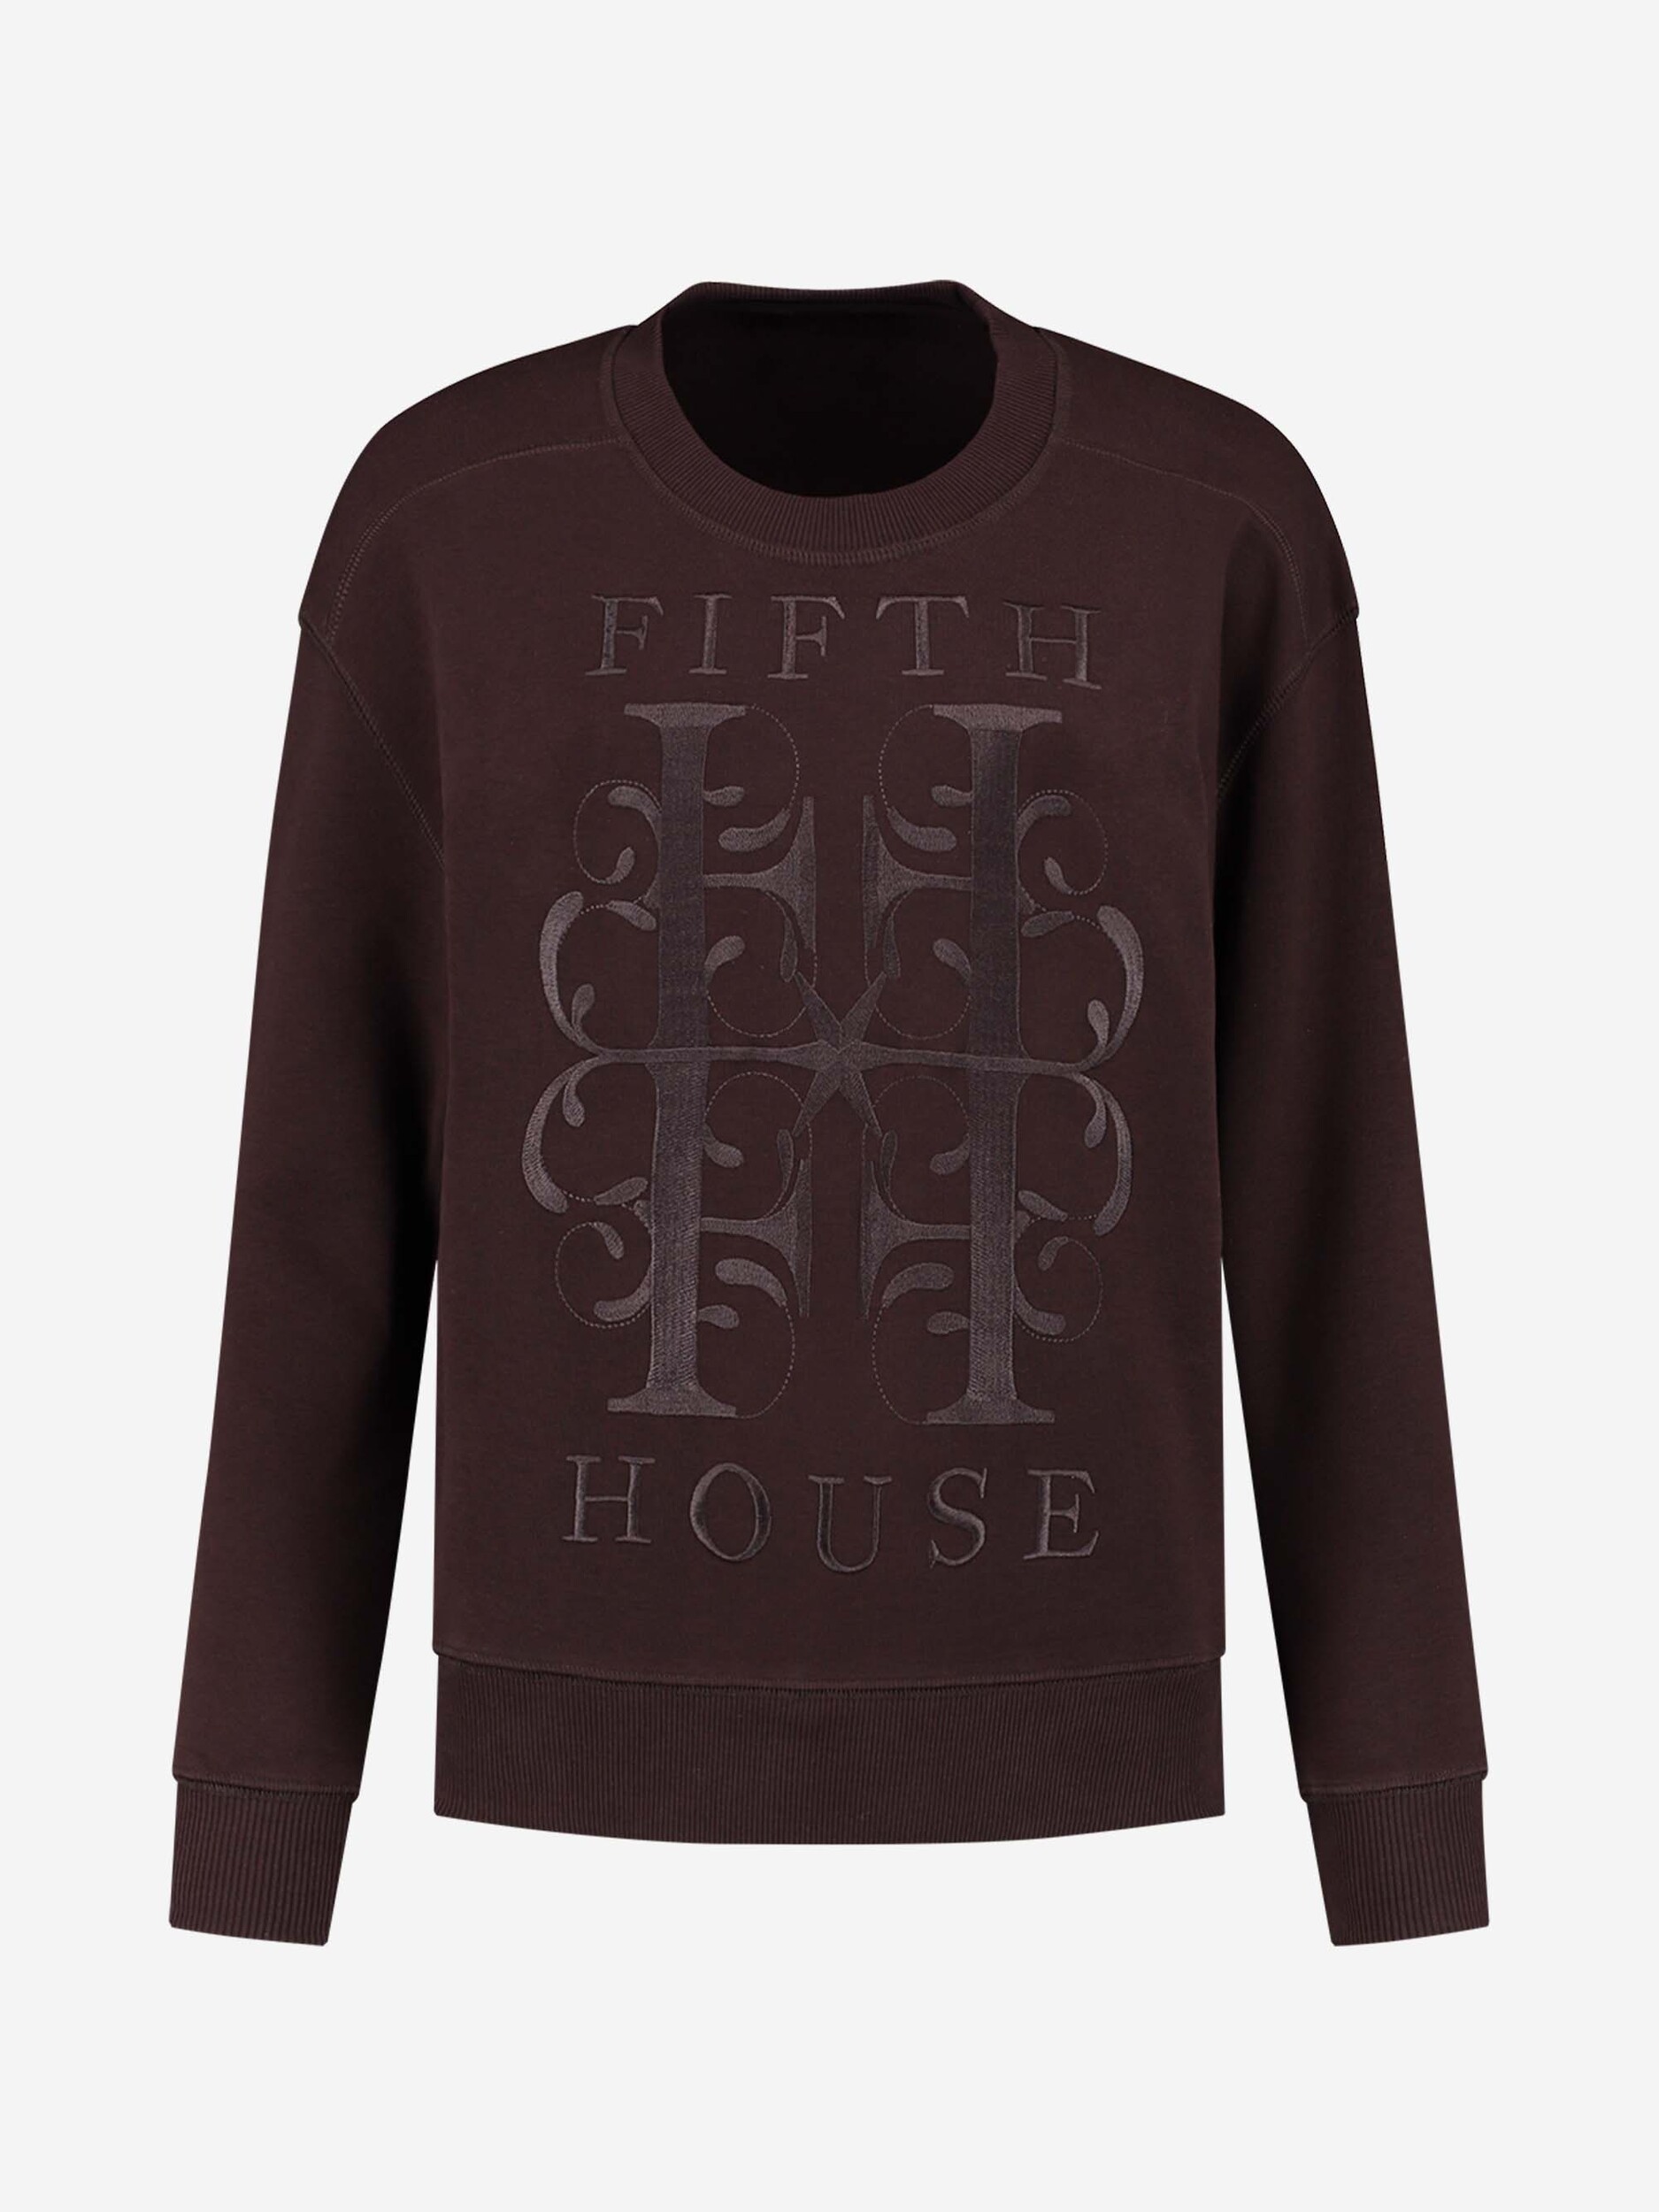 fifth-house-oman-logo-sweater-bp_ynj_2xy_rlnl54